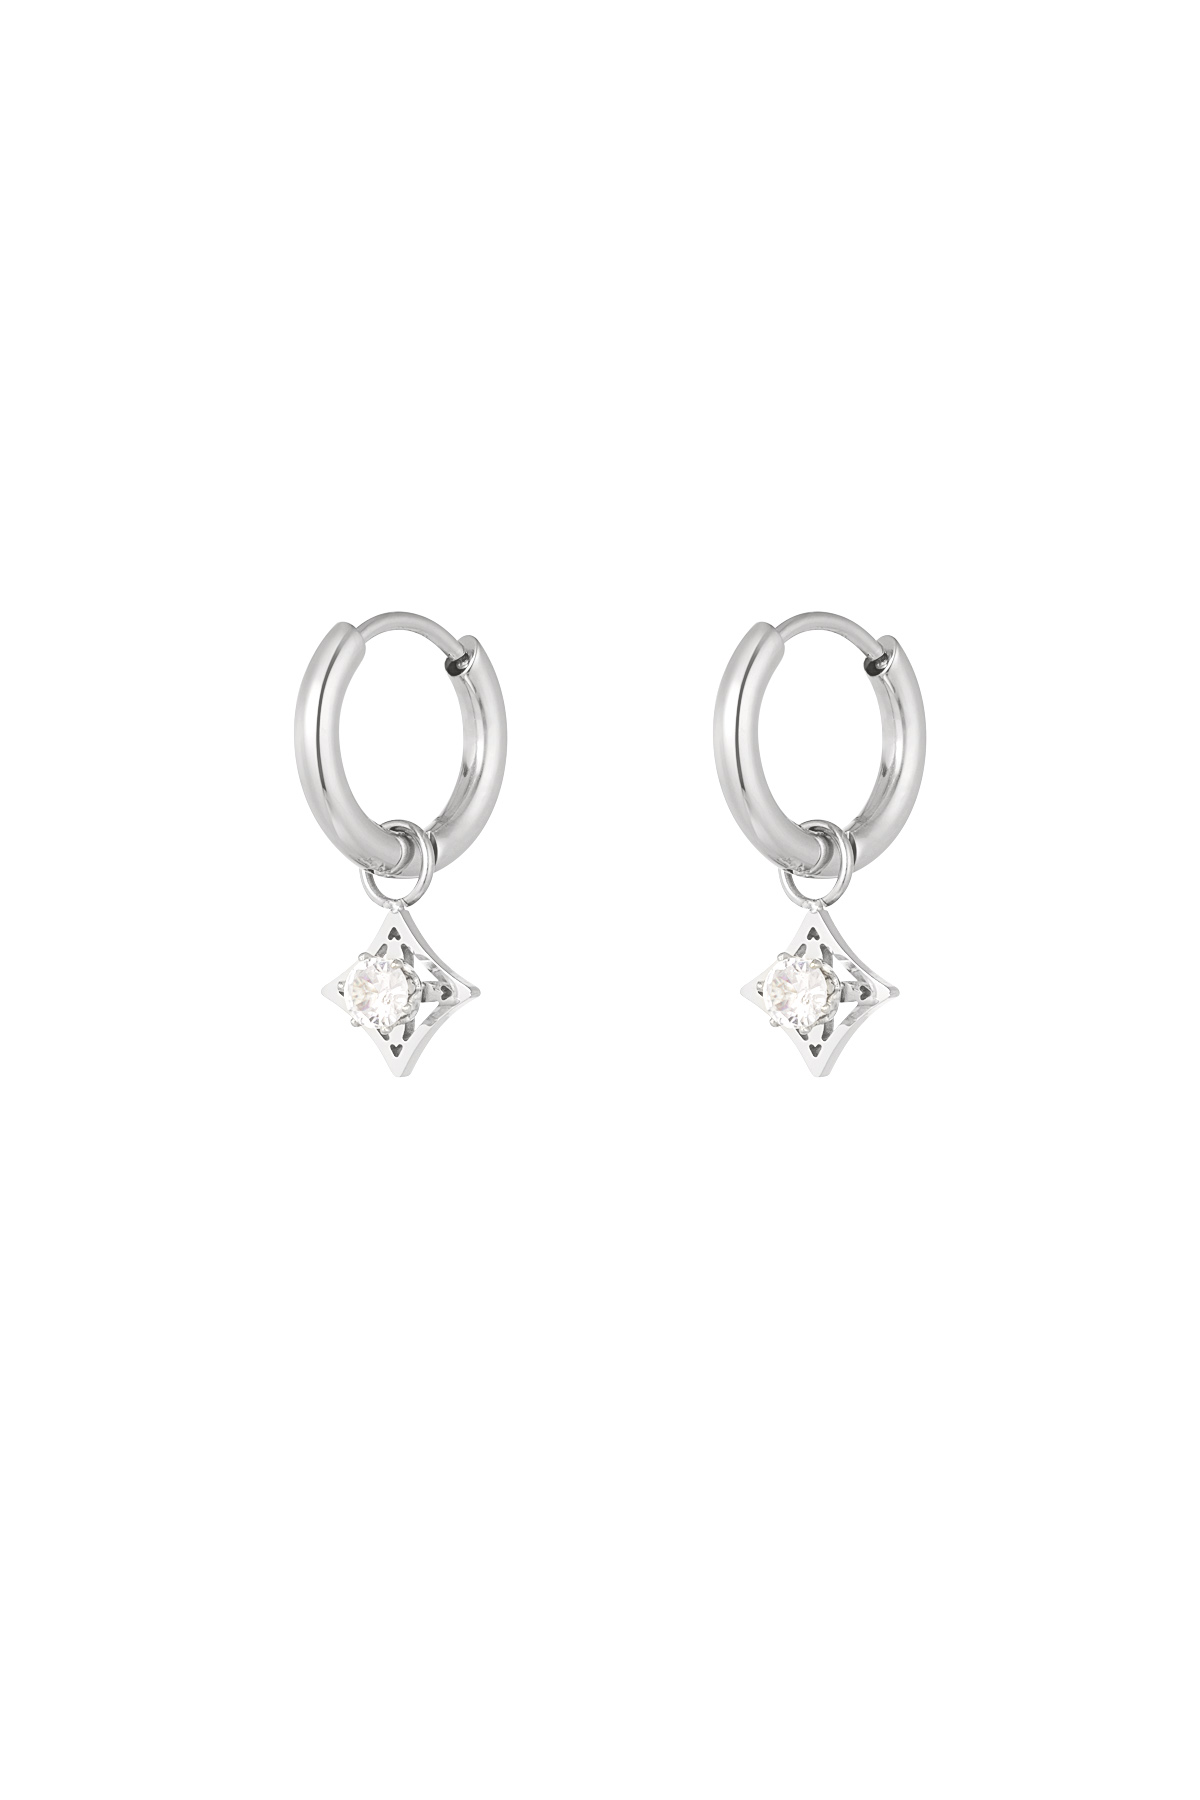 Earrings minimalist diamond with stone - silver